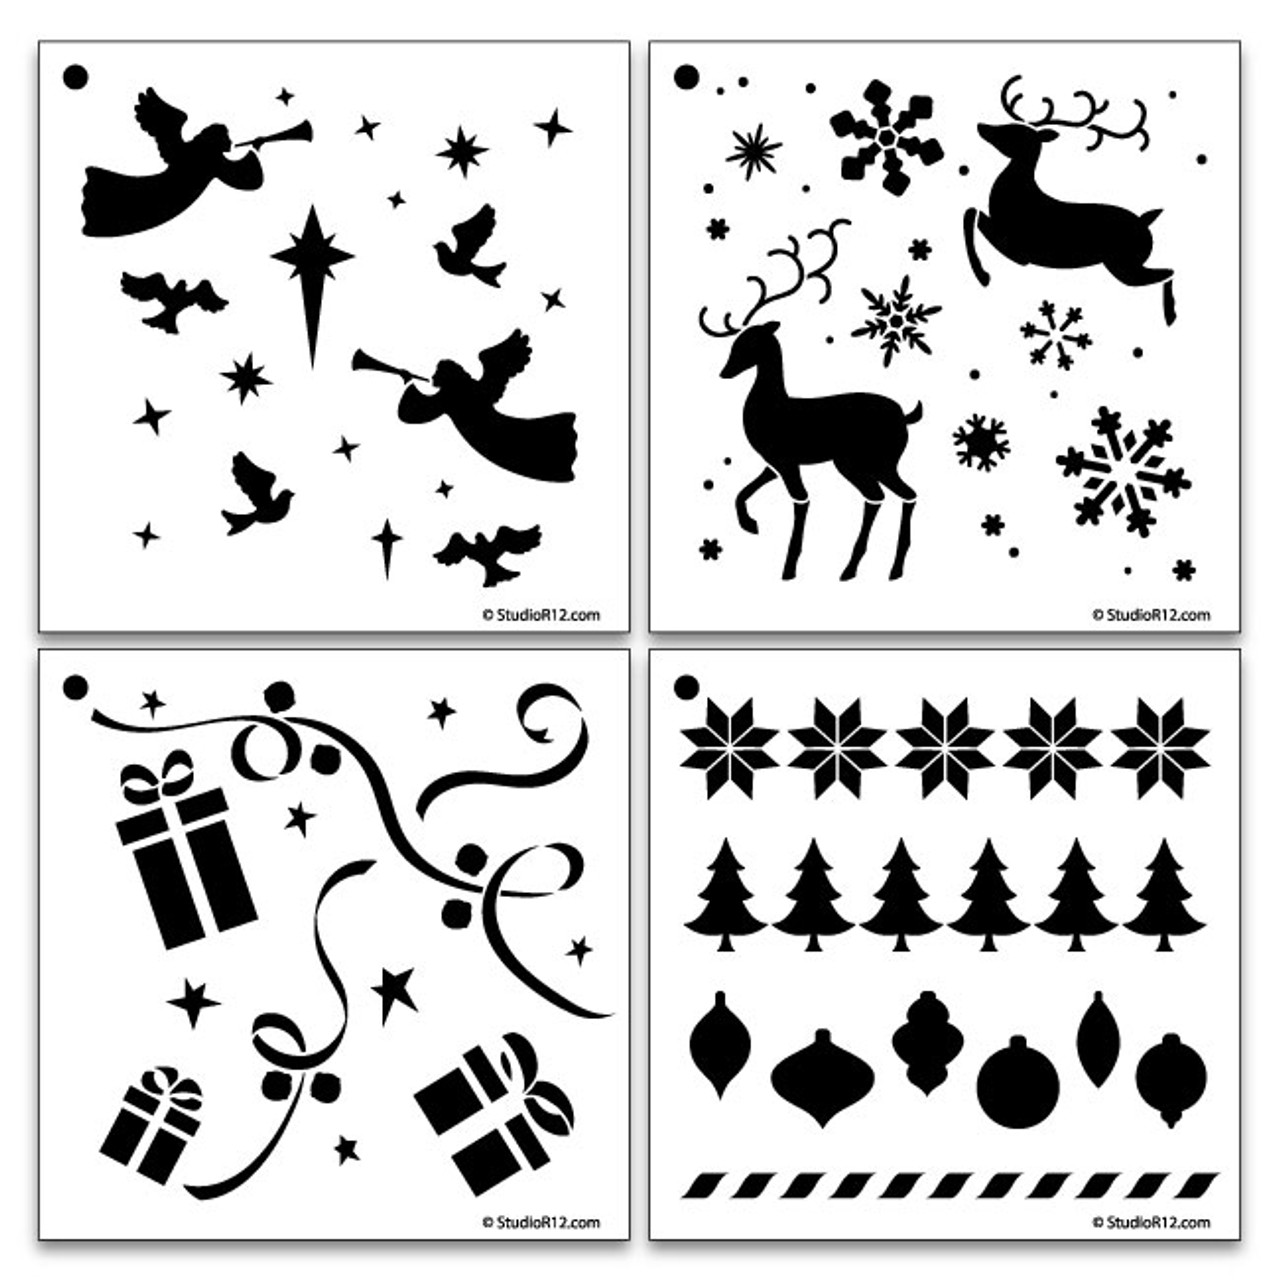 4 NEW Christmas Pattern Stencils Set